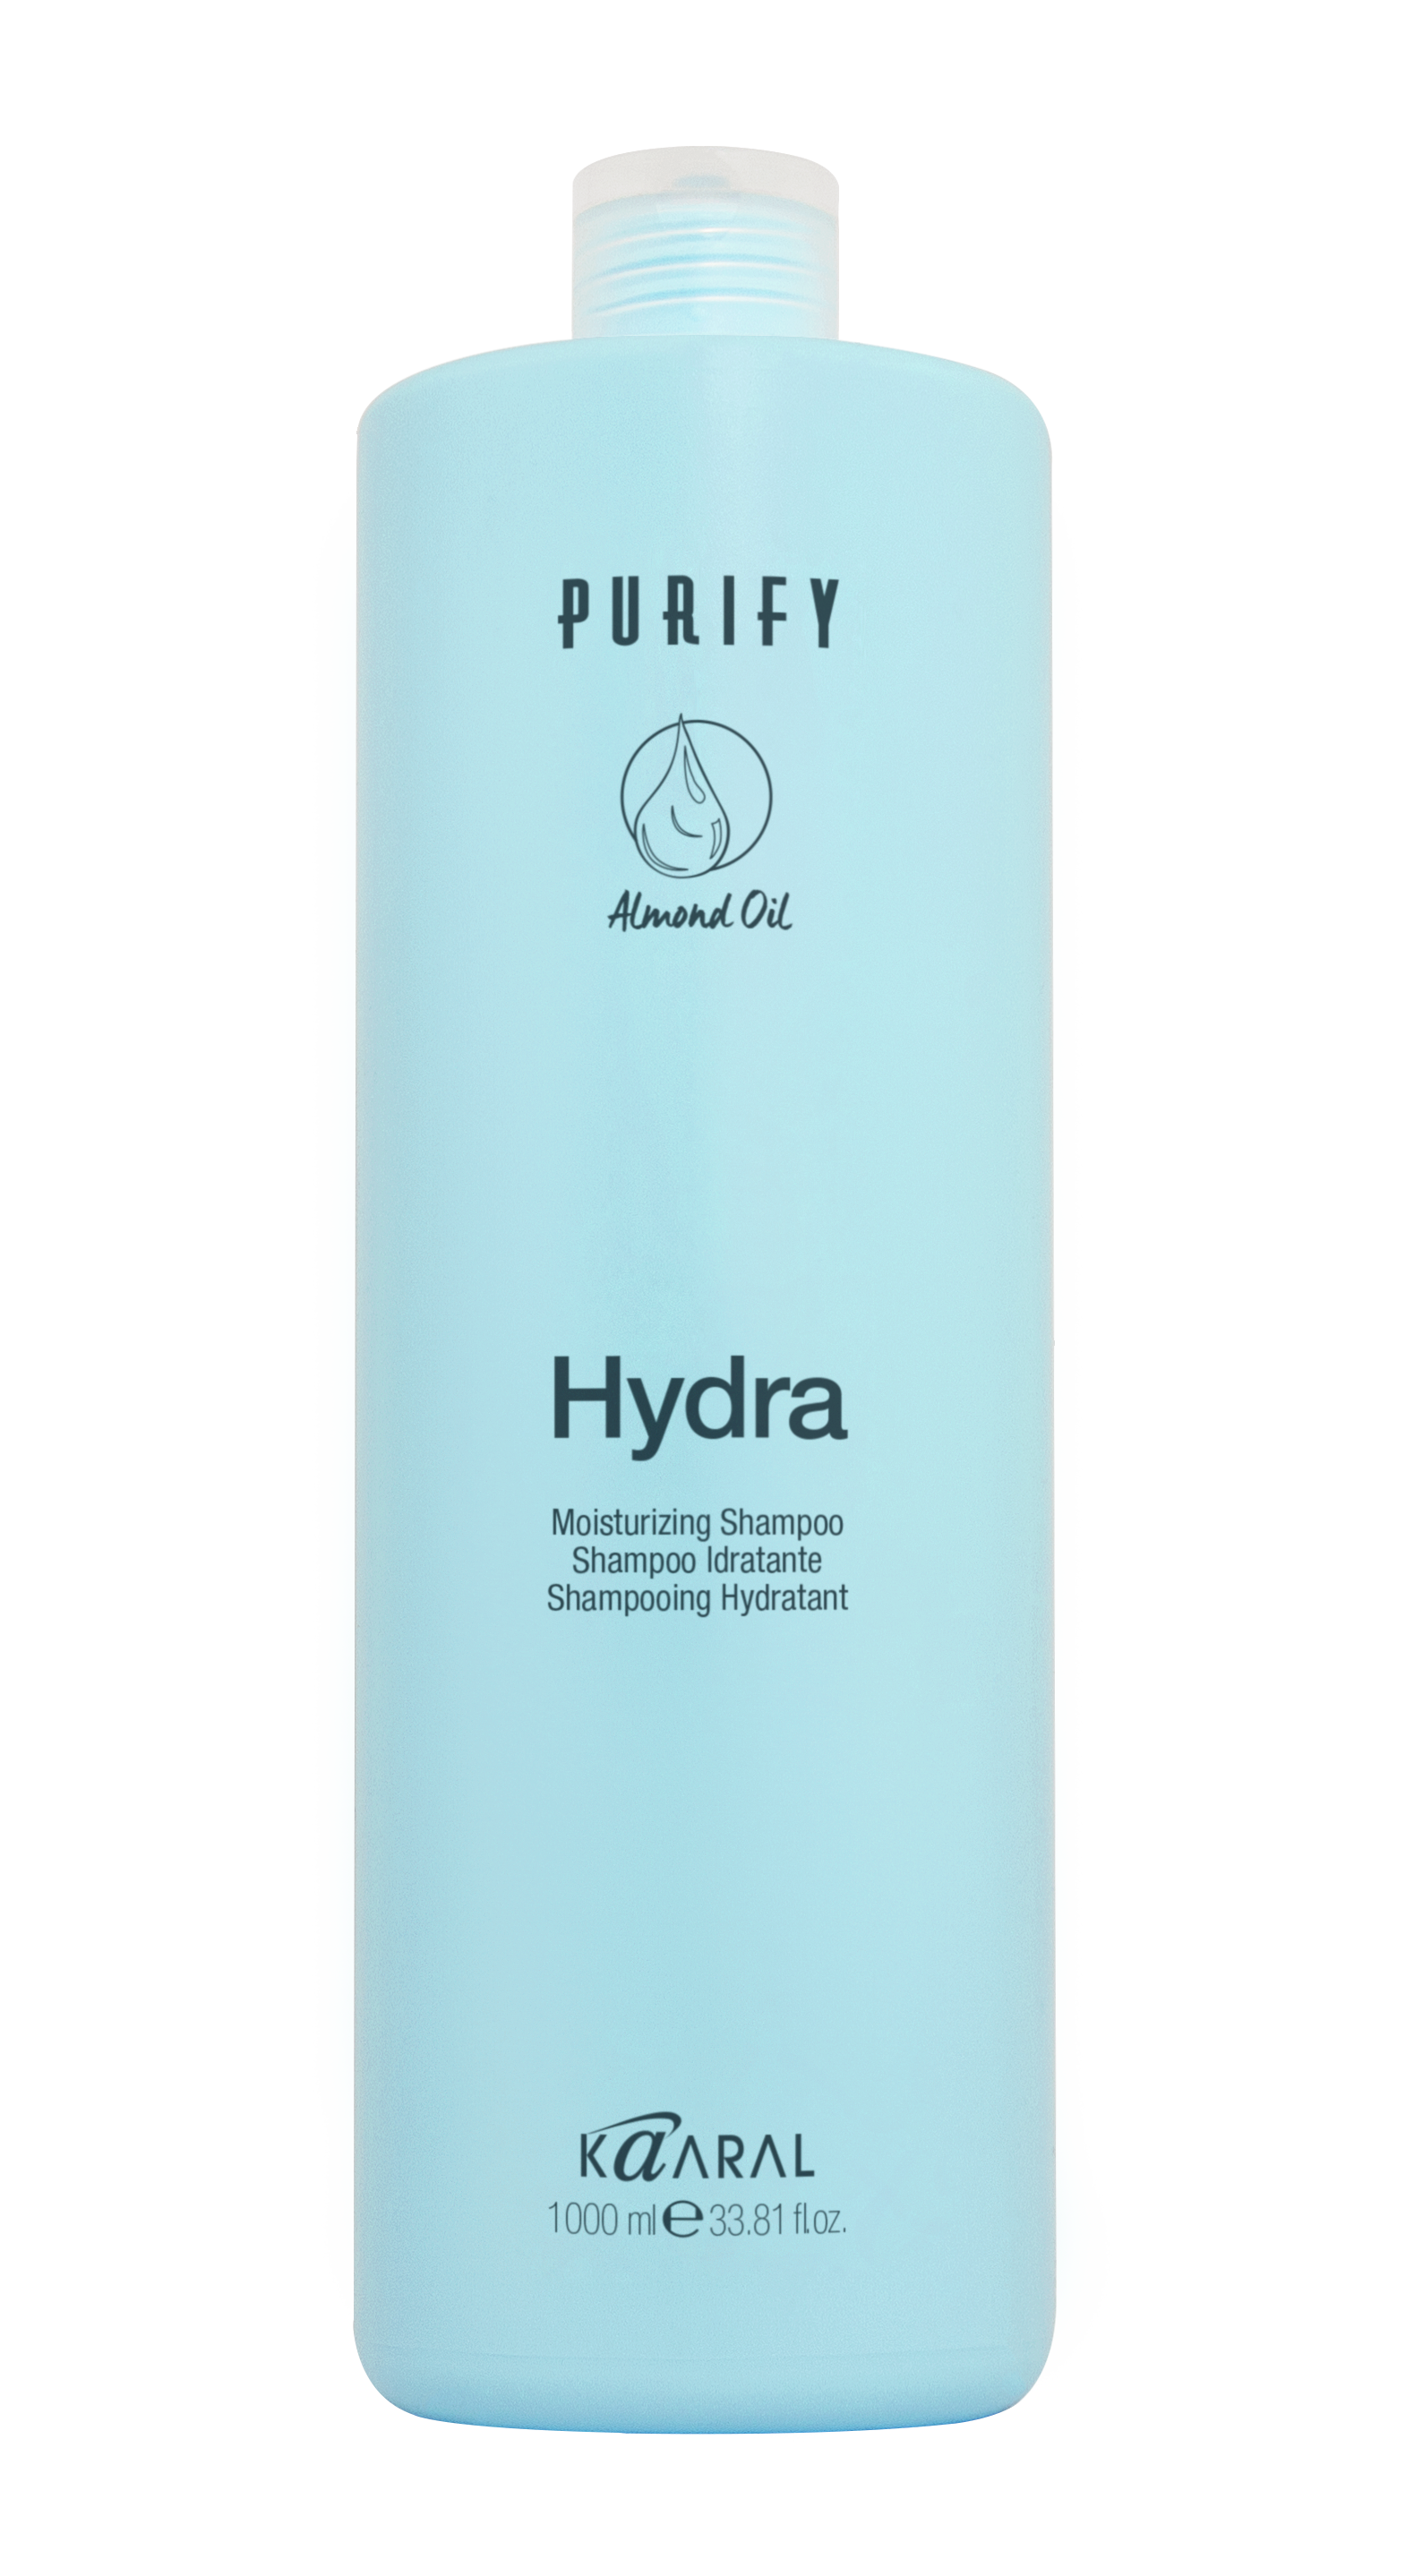 Kaaral - Purify Hydra Shampoo Liter Size - Creata Beauty - Professional Beauty Products